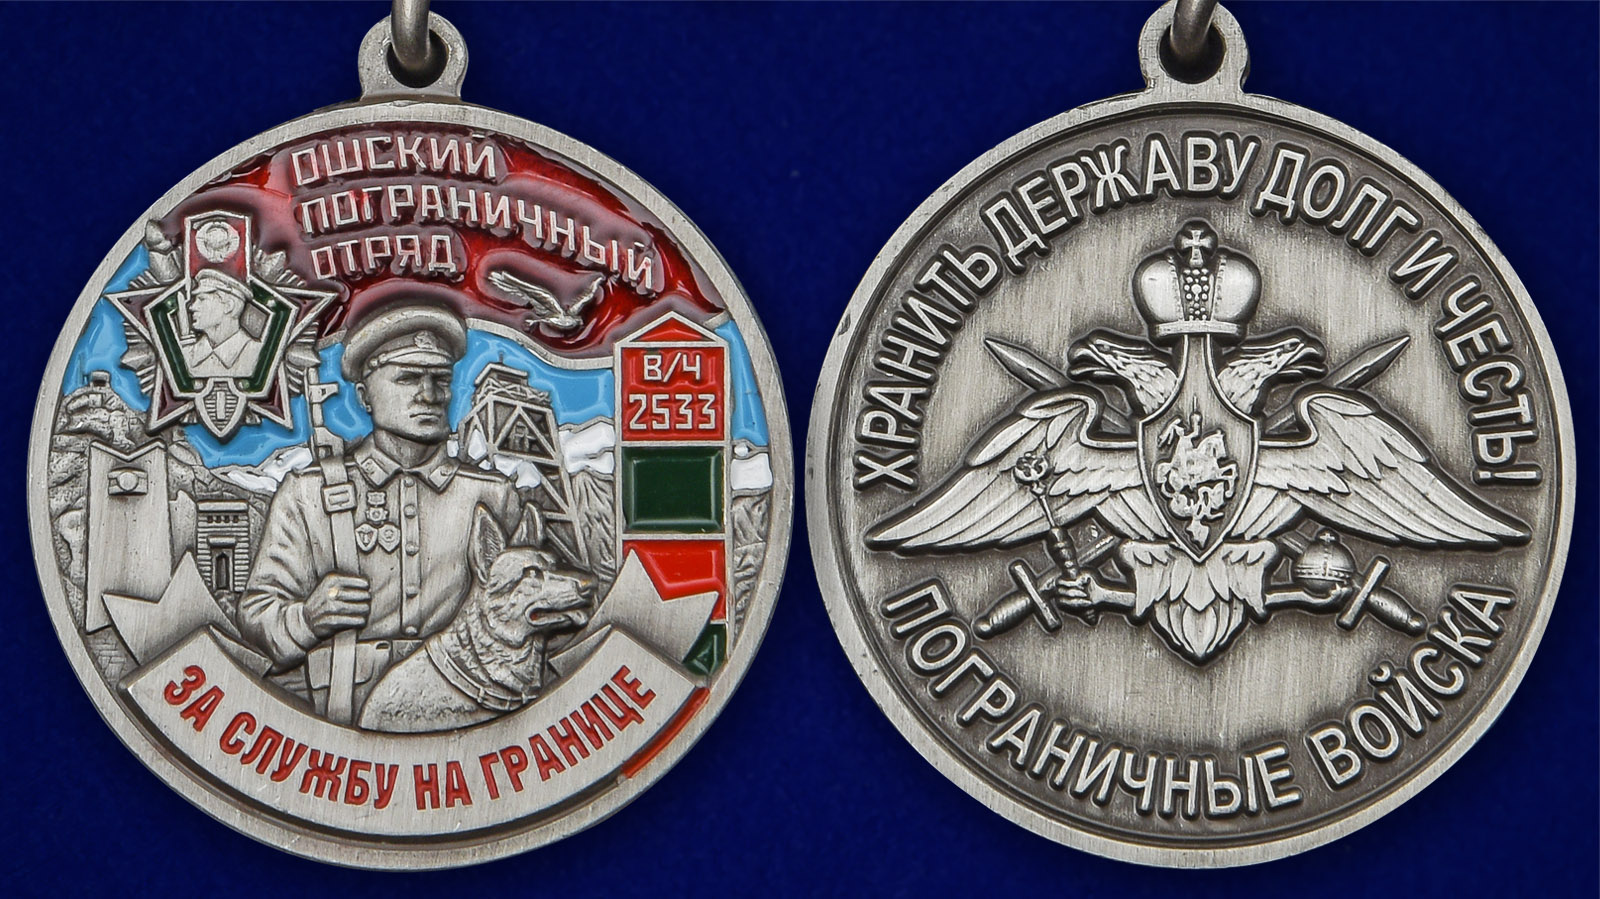 Описание медали "За службу на границе" (Ошский ПогО) - аверс и реверс